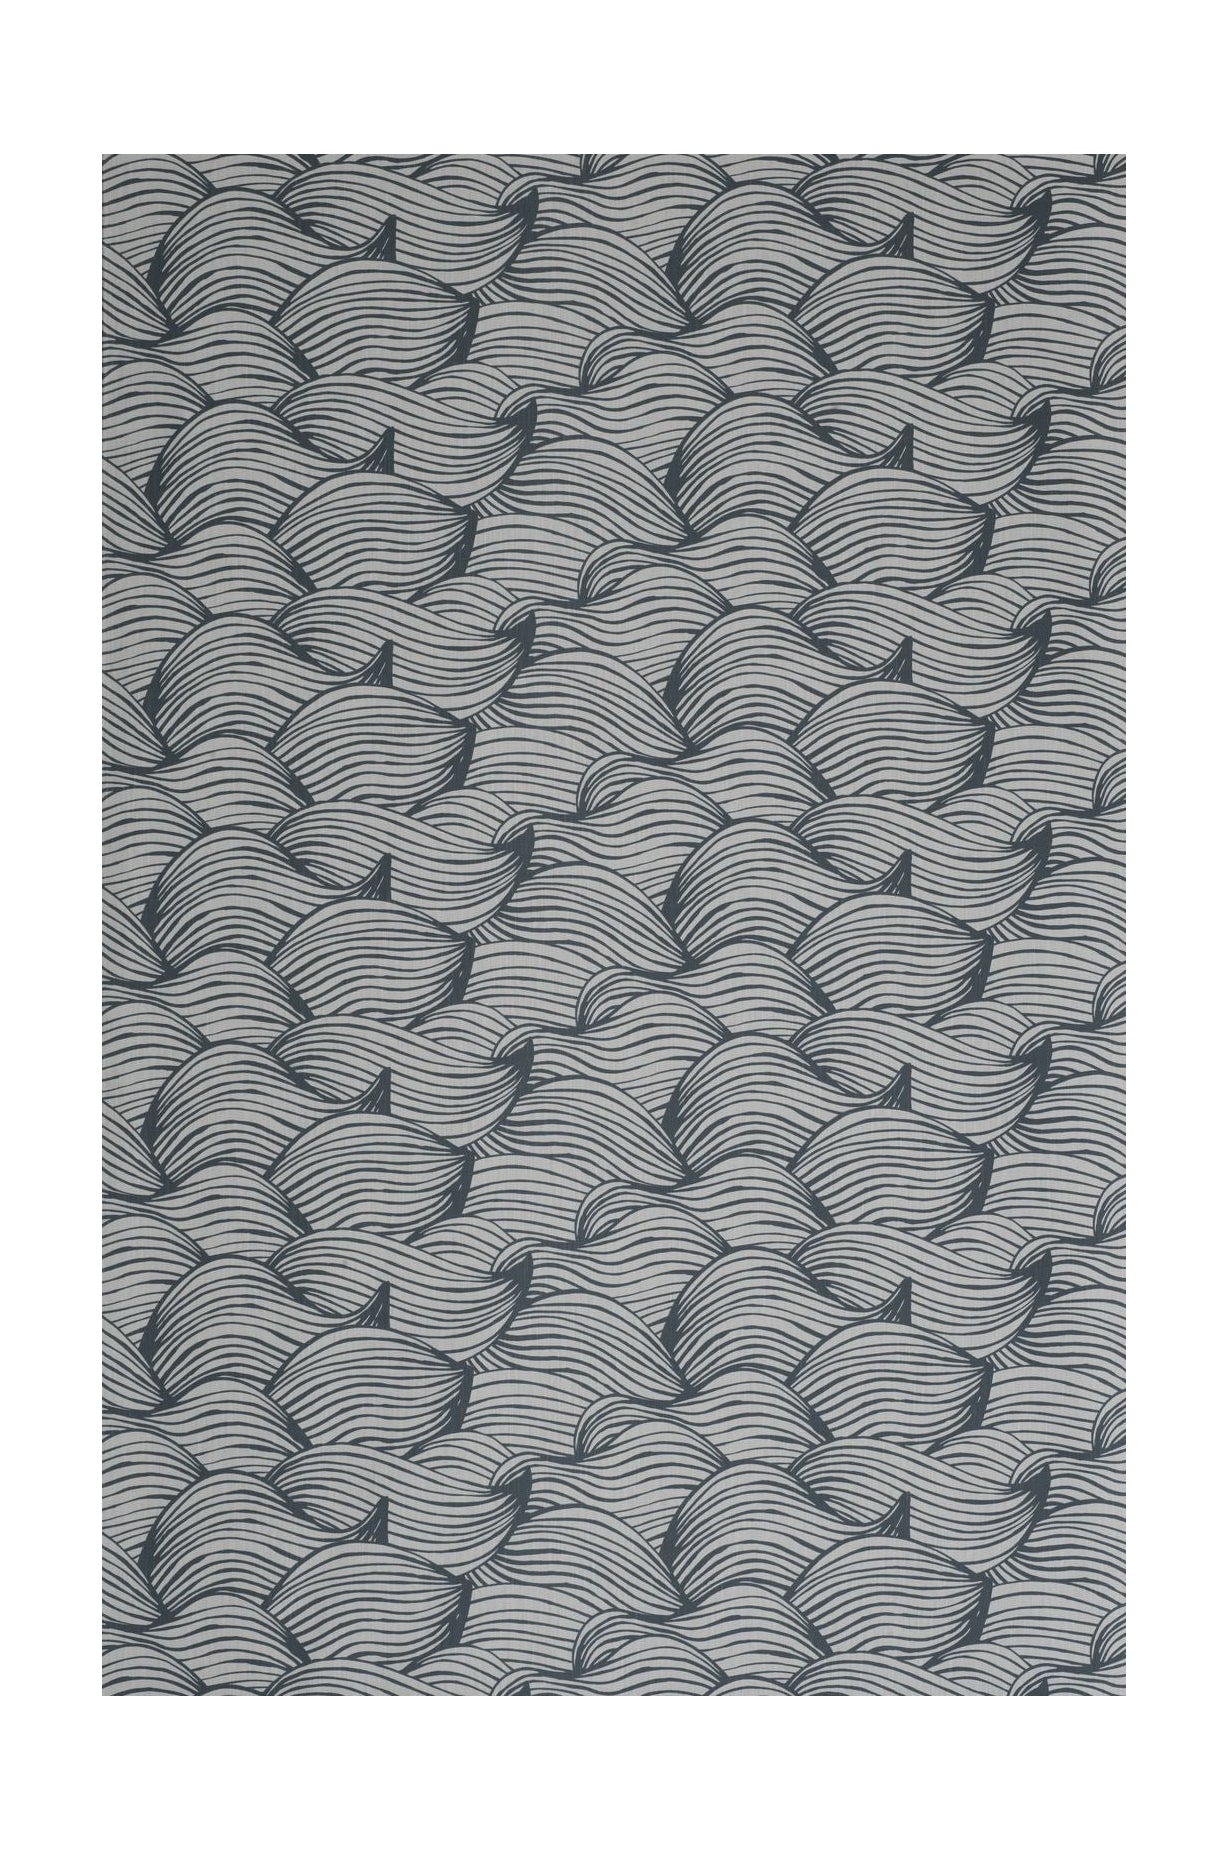 Spira Wave Fabric Width 150 Cm (Price Per Meter), Blue